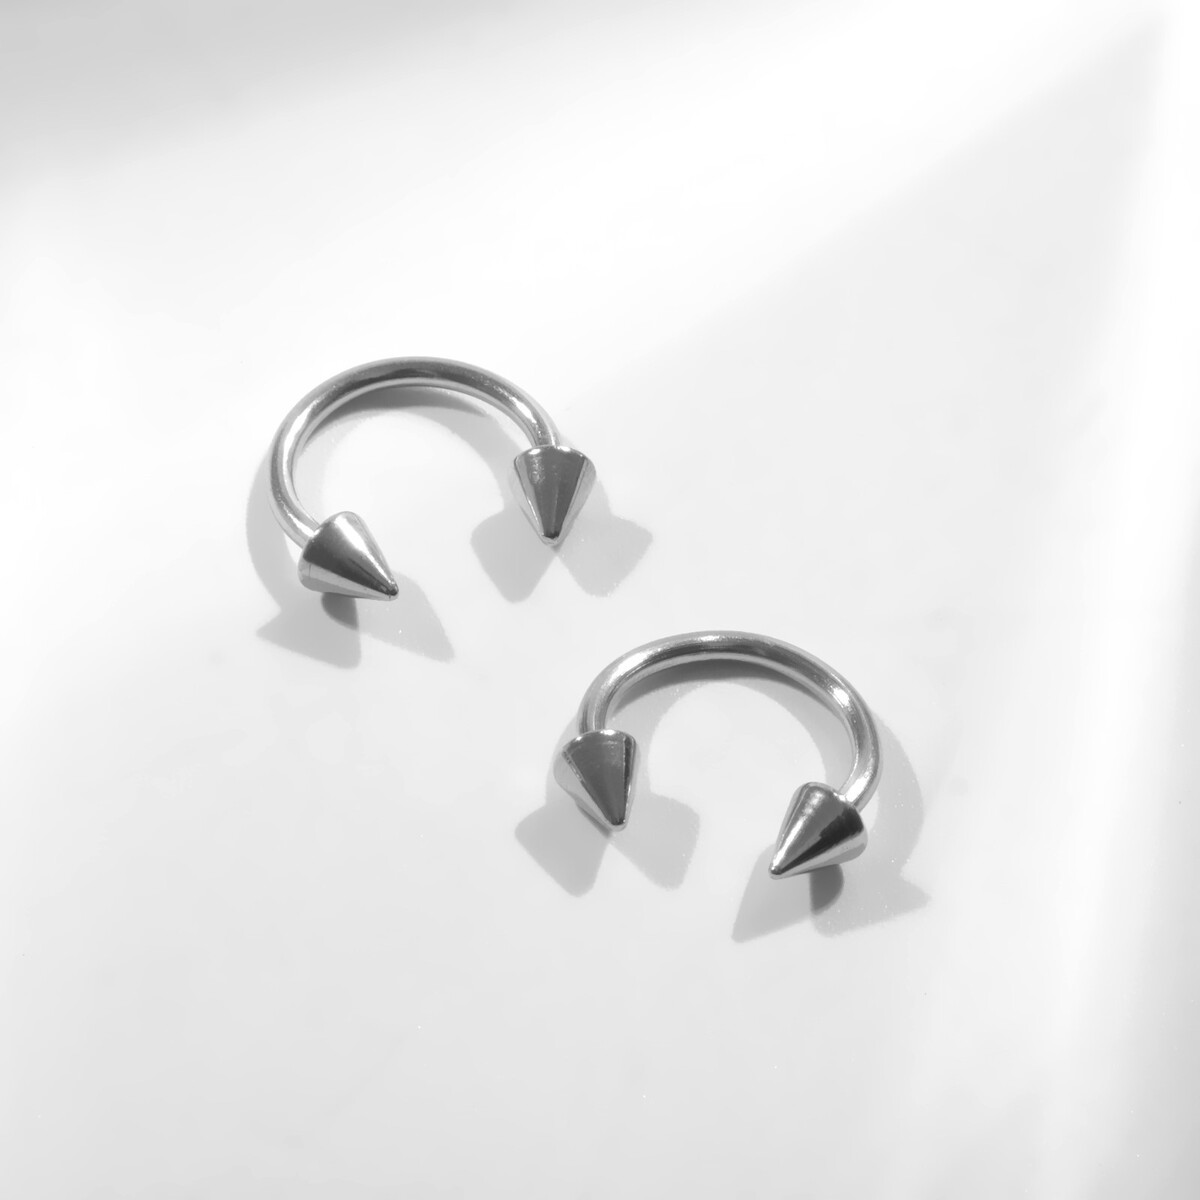 Циркуляр в бровь (пирсинг), шип, d=8 мм, пара, цвет серебро пирсинг в ухо кольцо космонавт d 13мм серебро